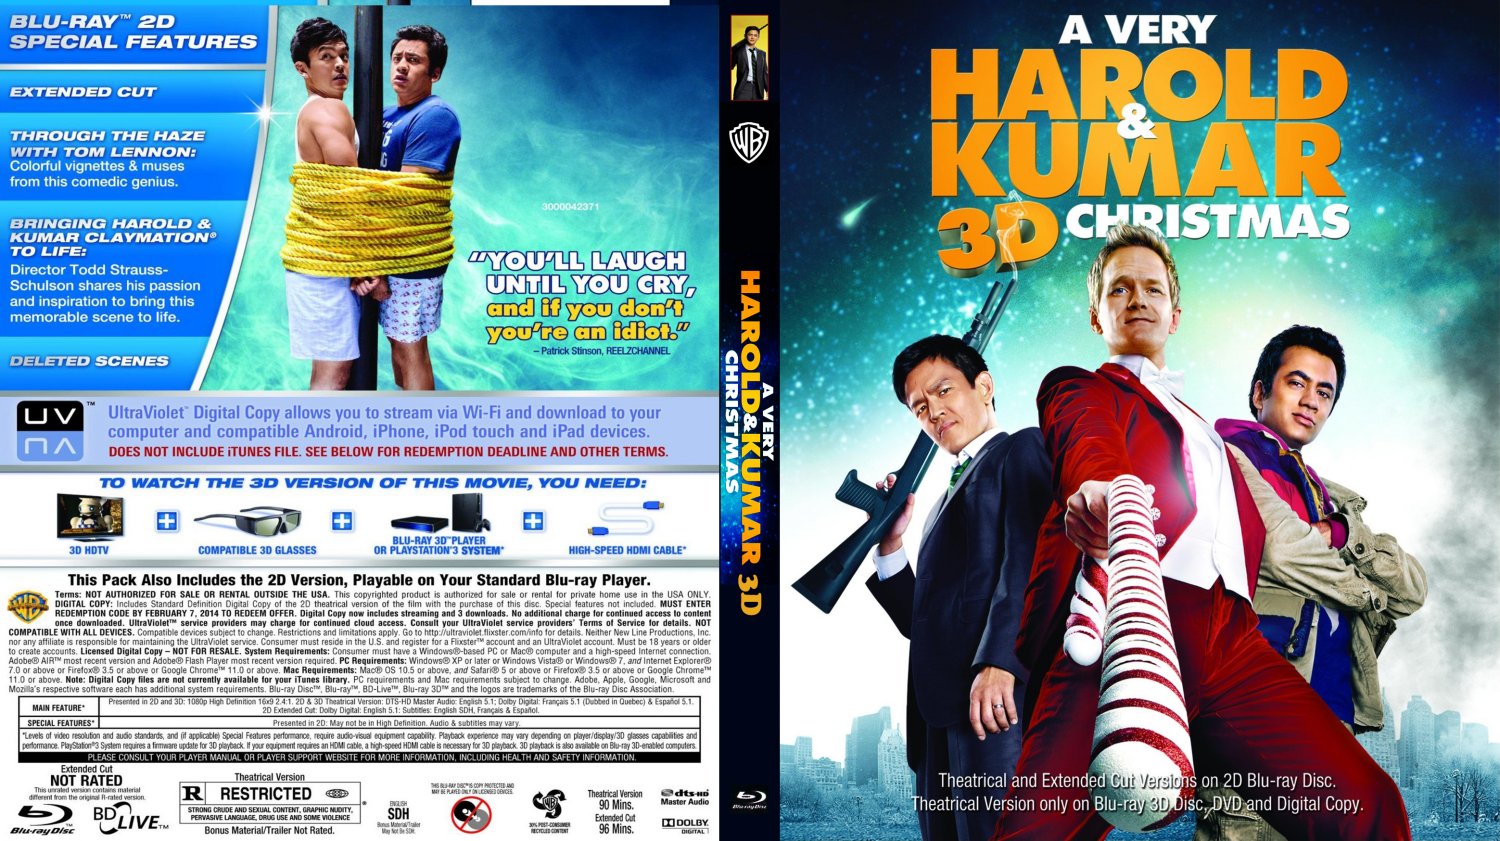 Amazoncom: A Very Harold Kumar Christmas Blu-ray 3D